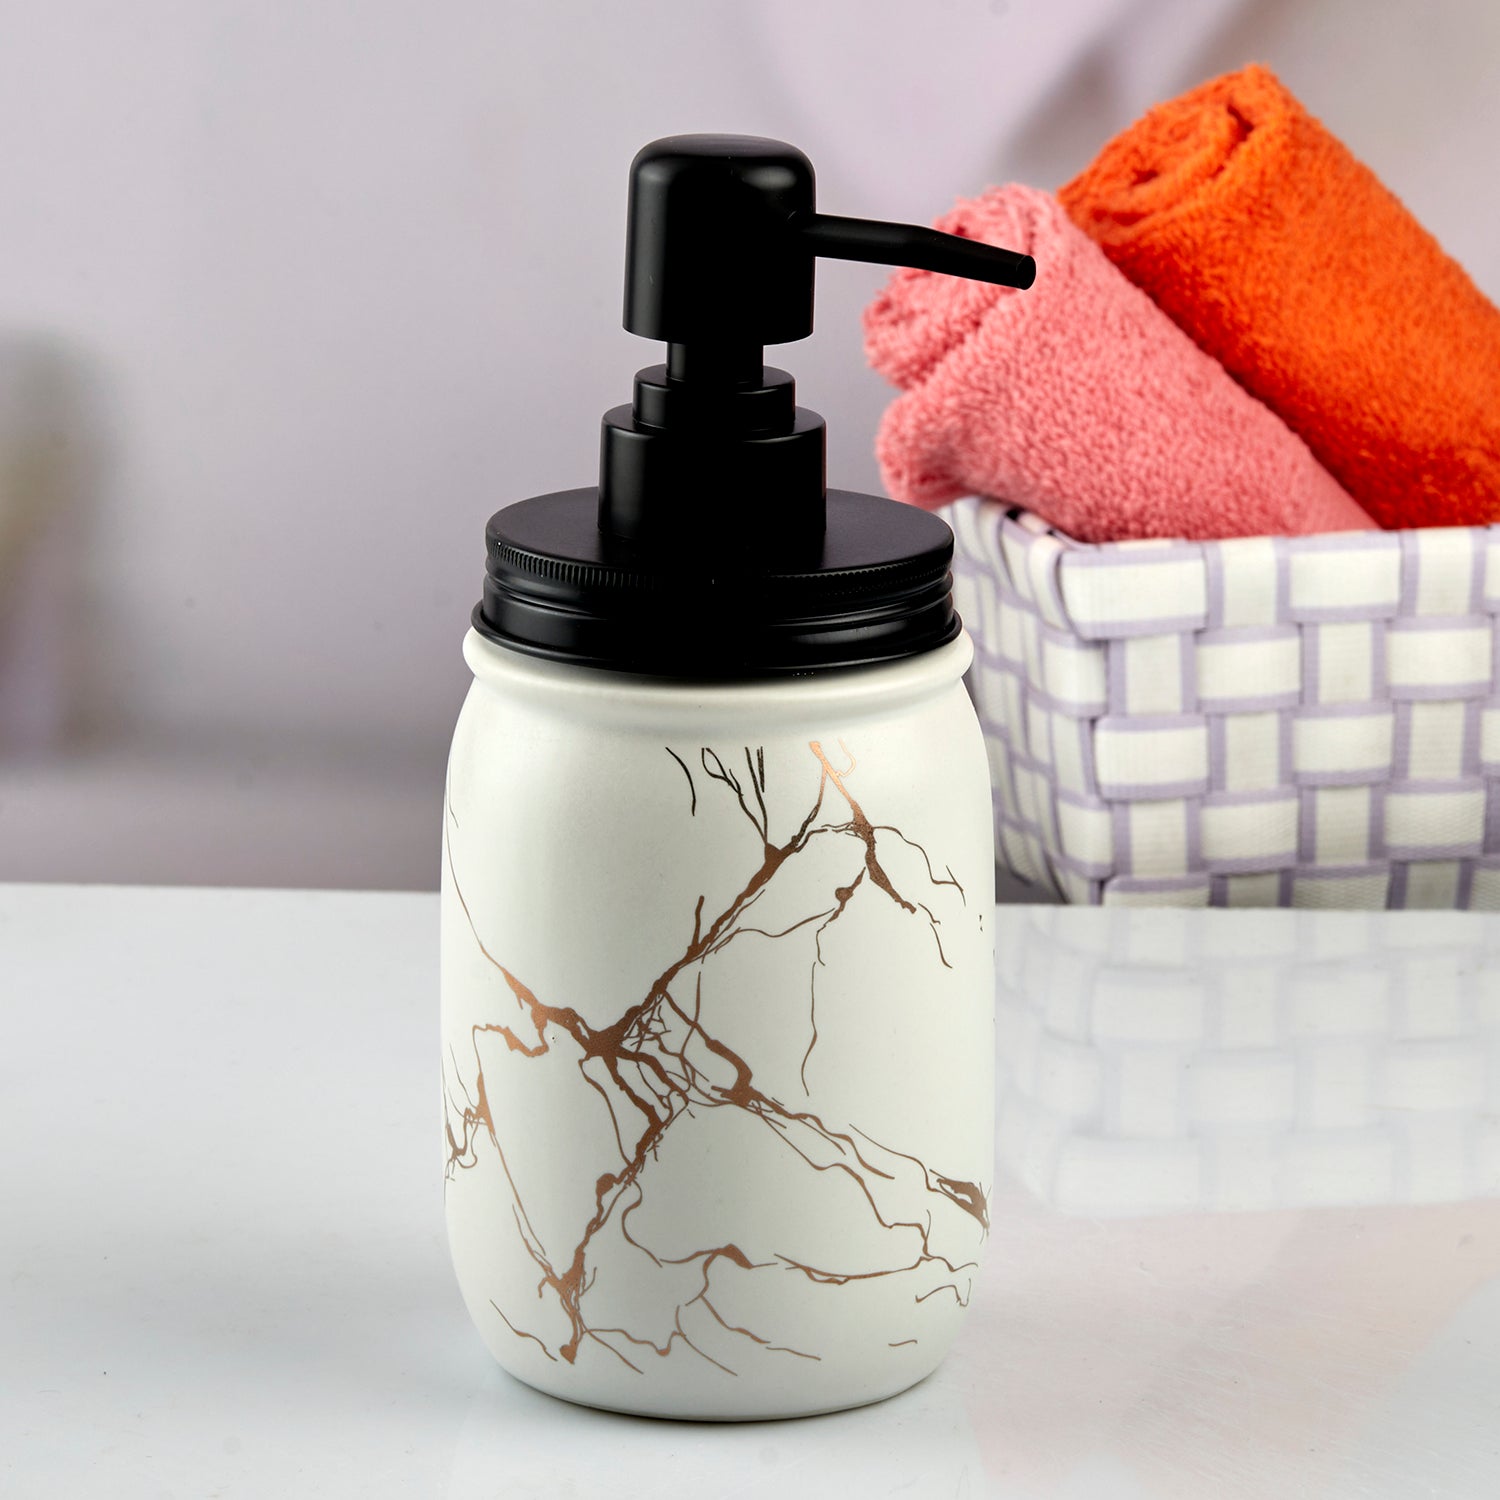 Ceramic Soap Dispenser liquid handwash pump for Bathroom, Set of 1, Black (10735)